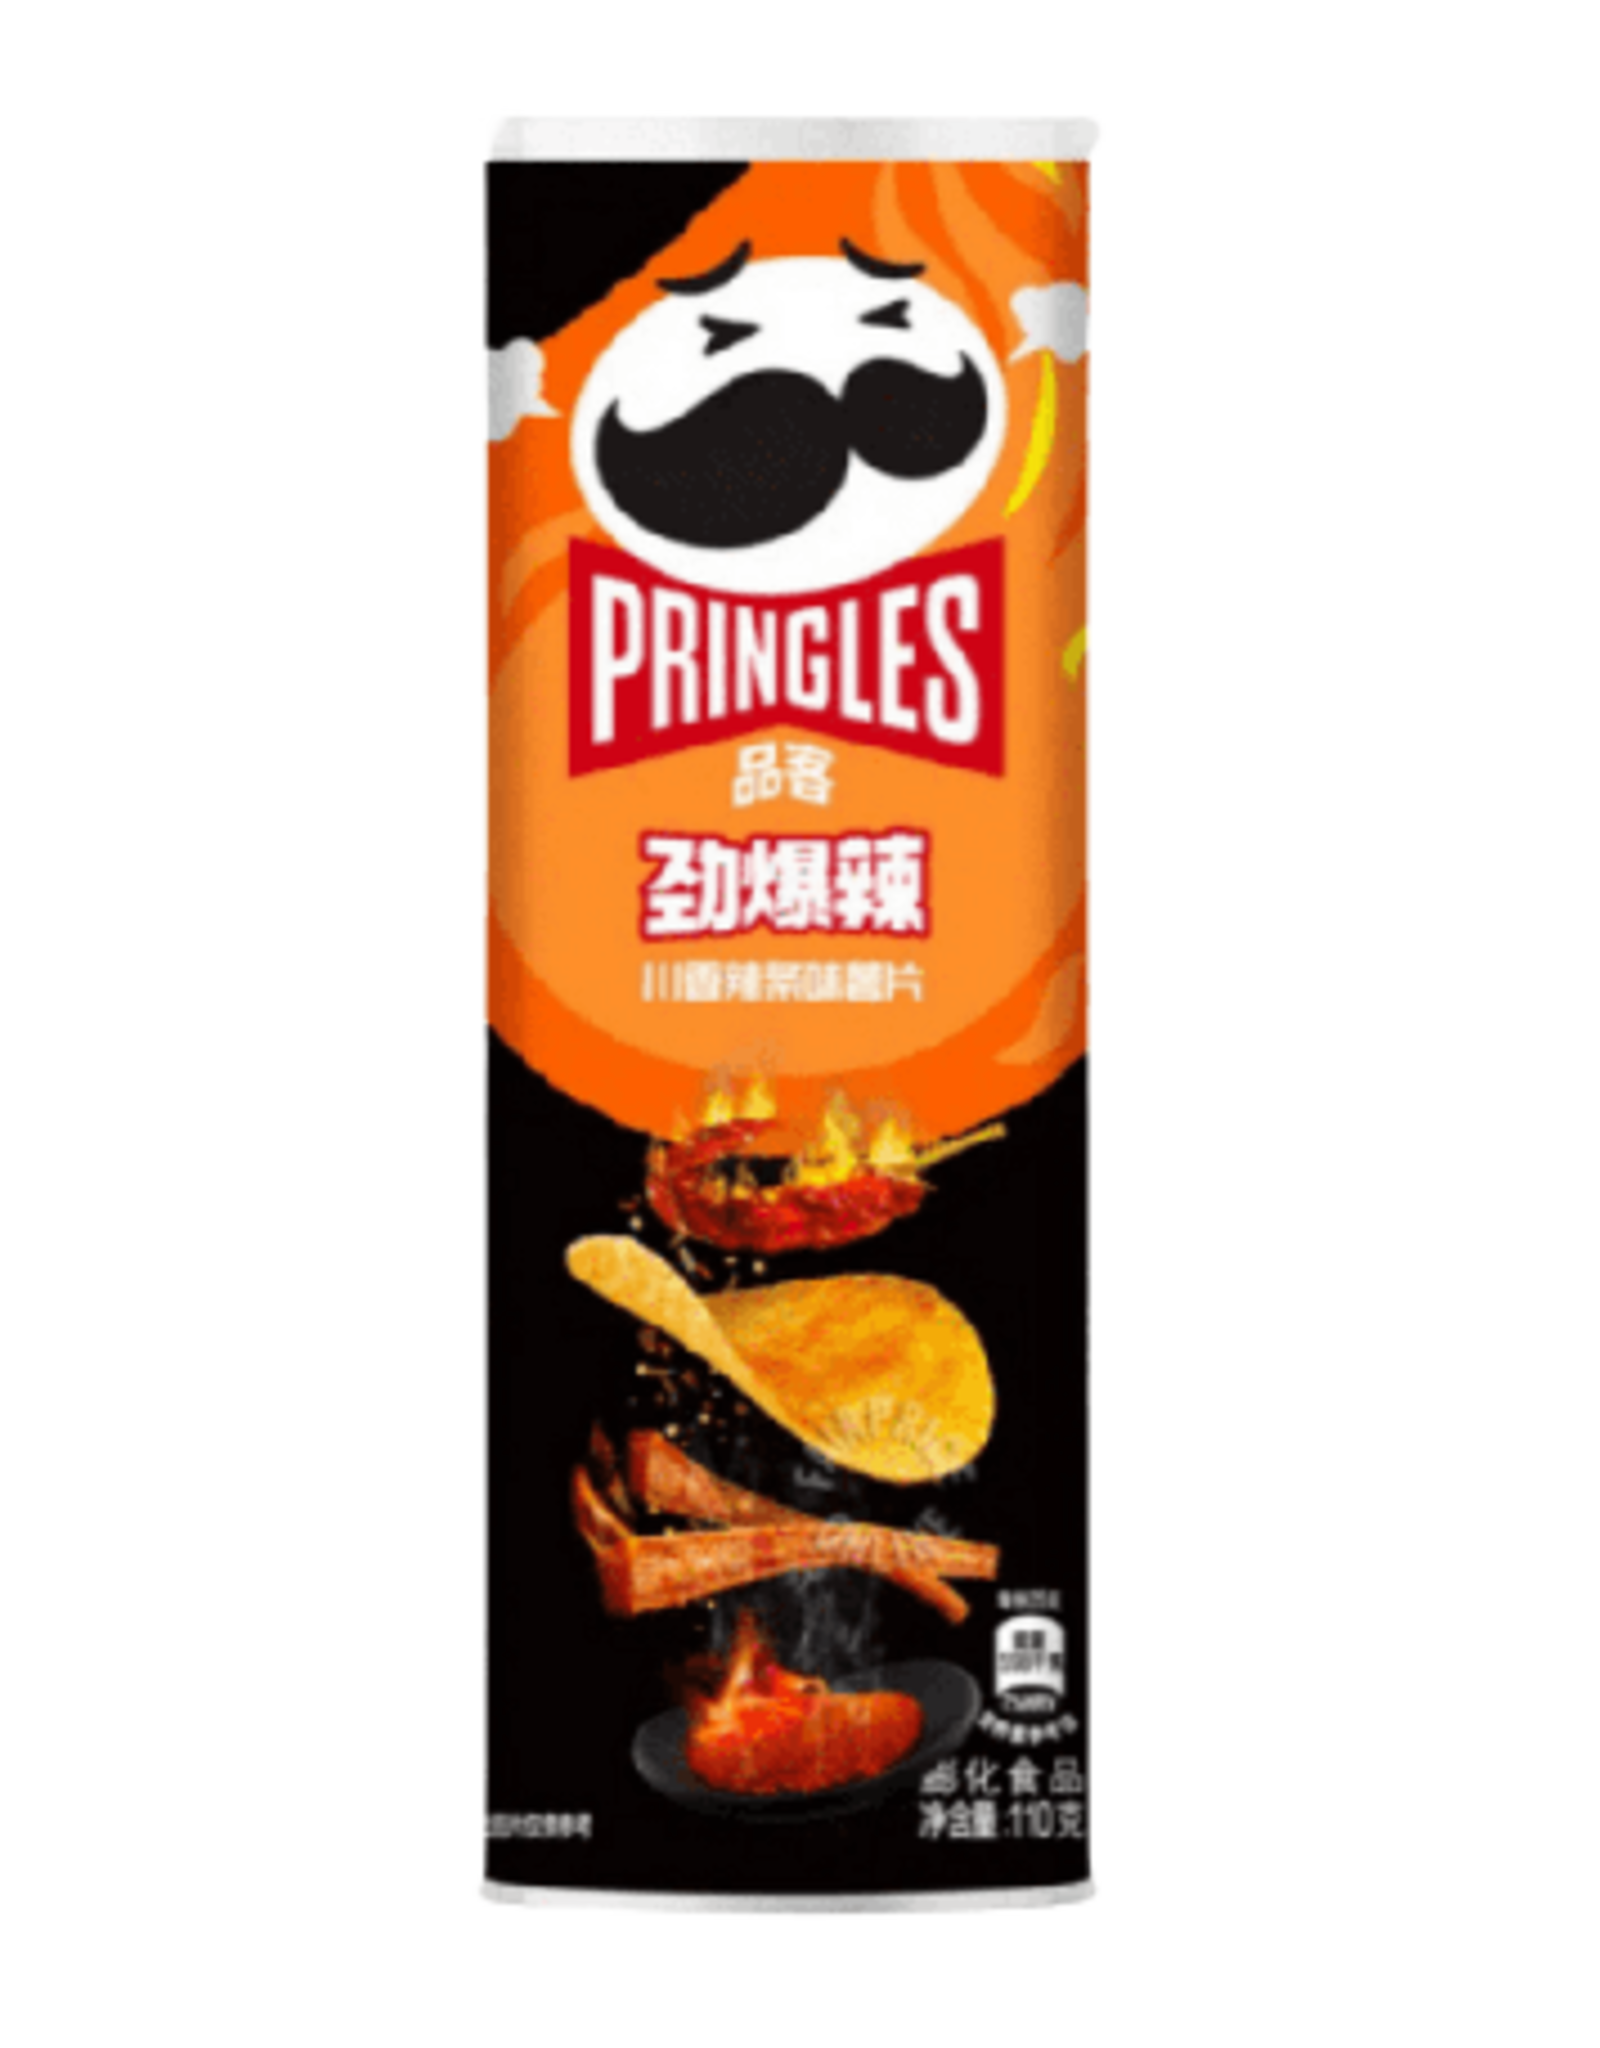 Pringles Scorchin’ Spicy Strips